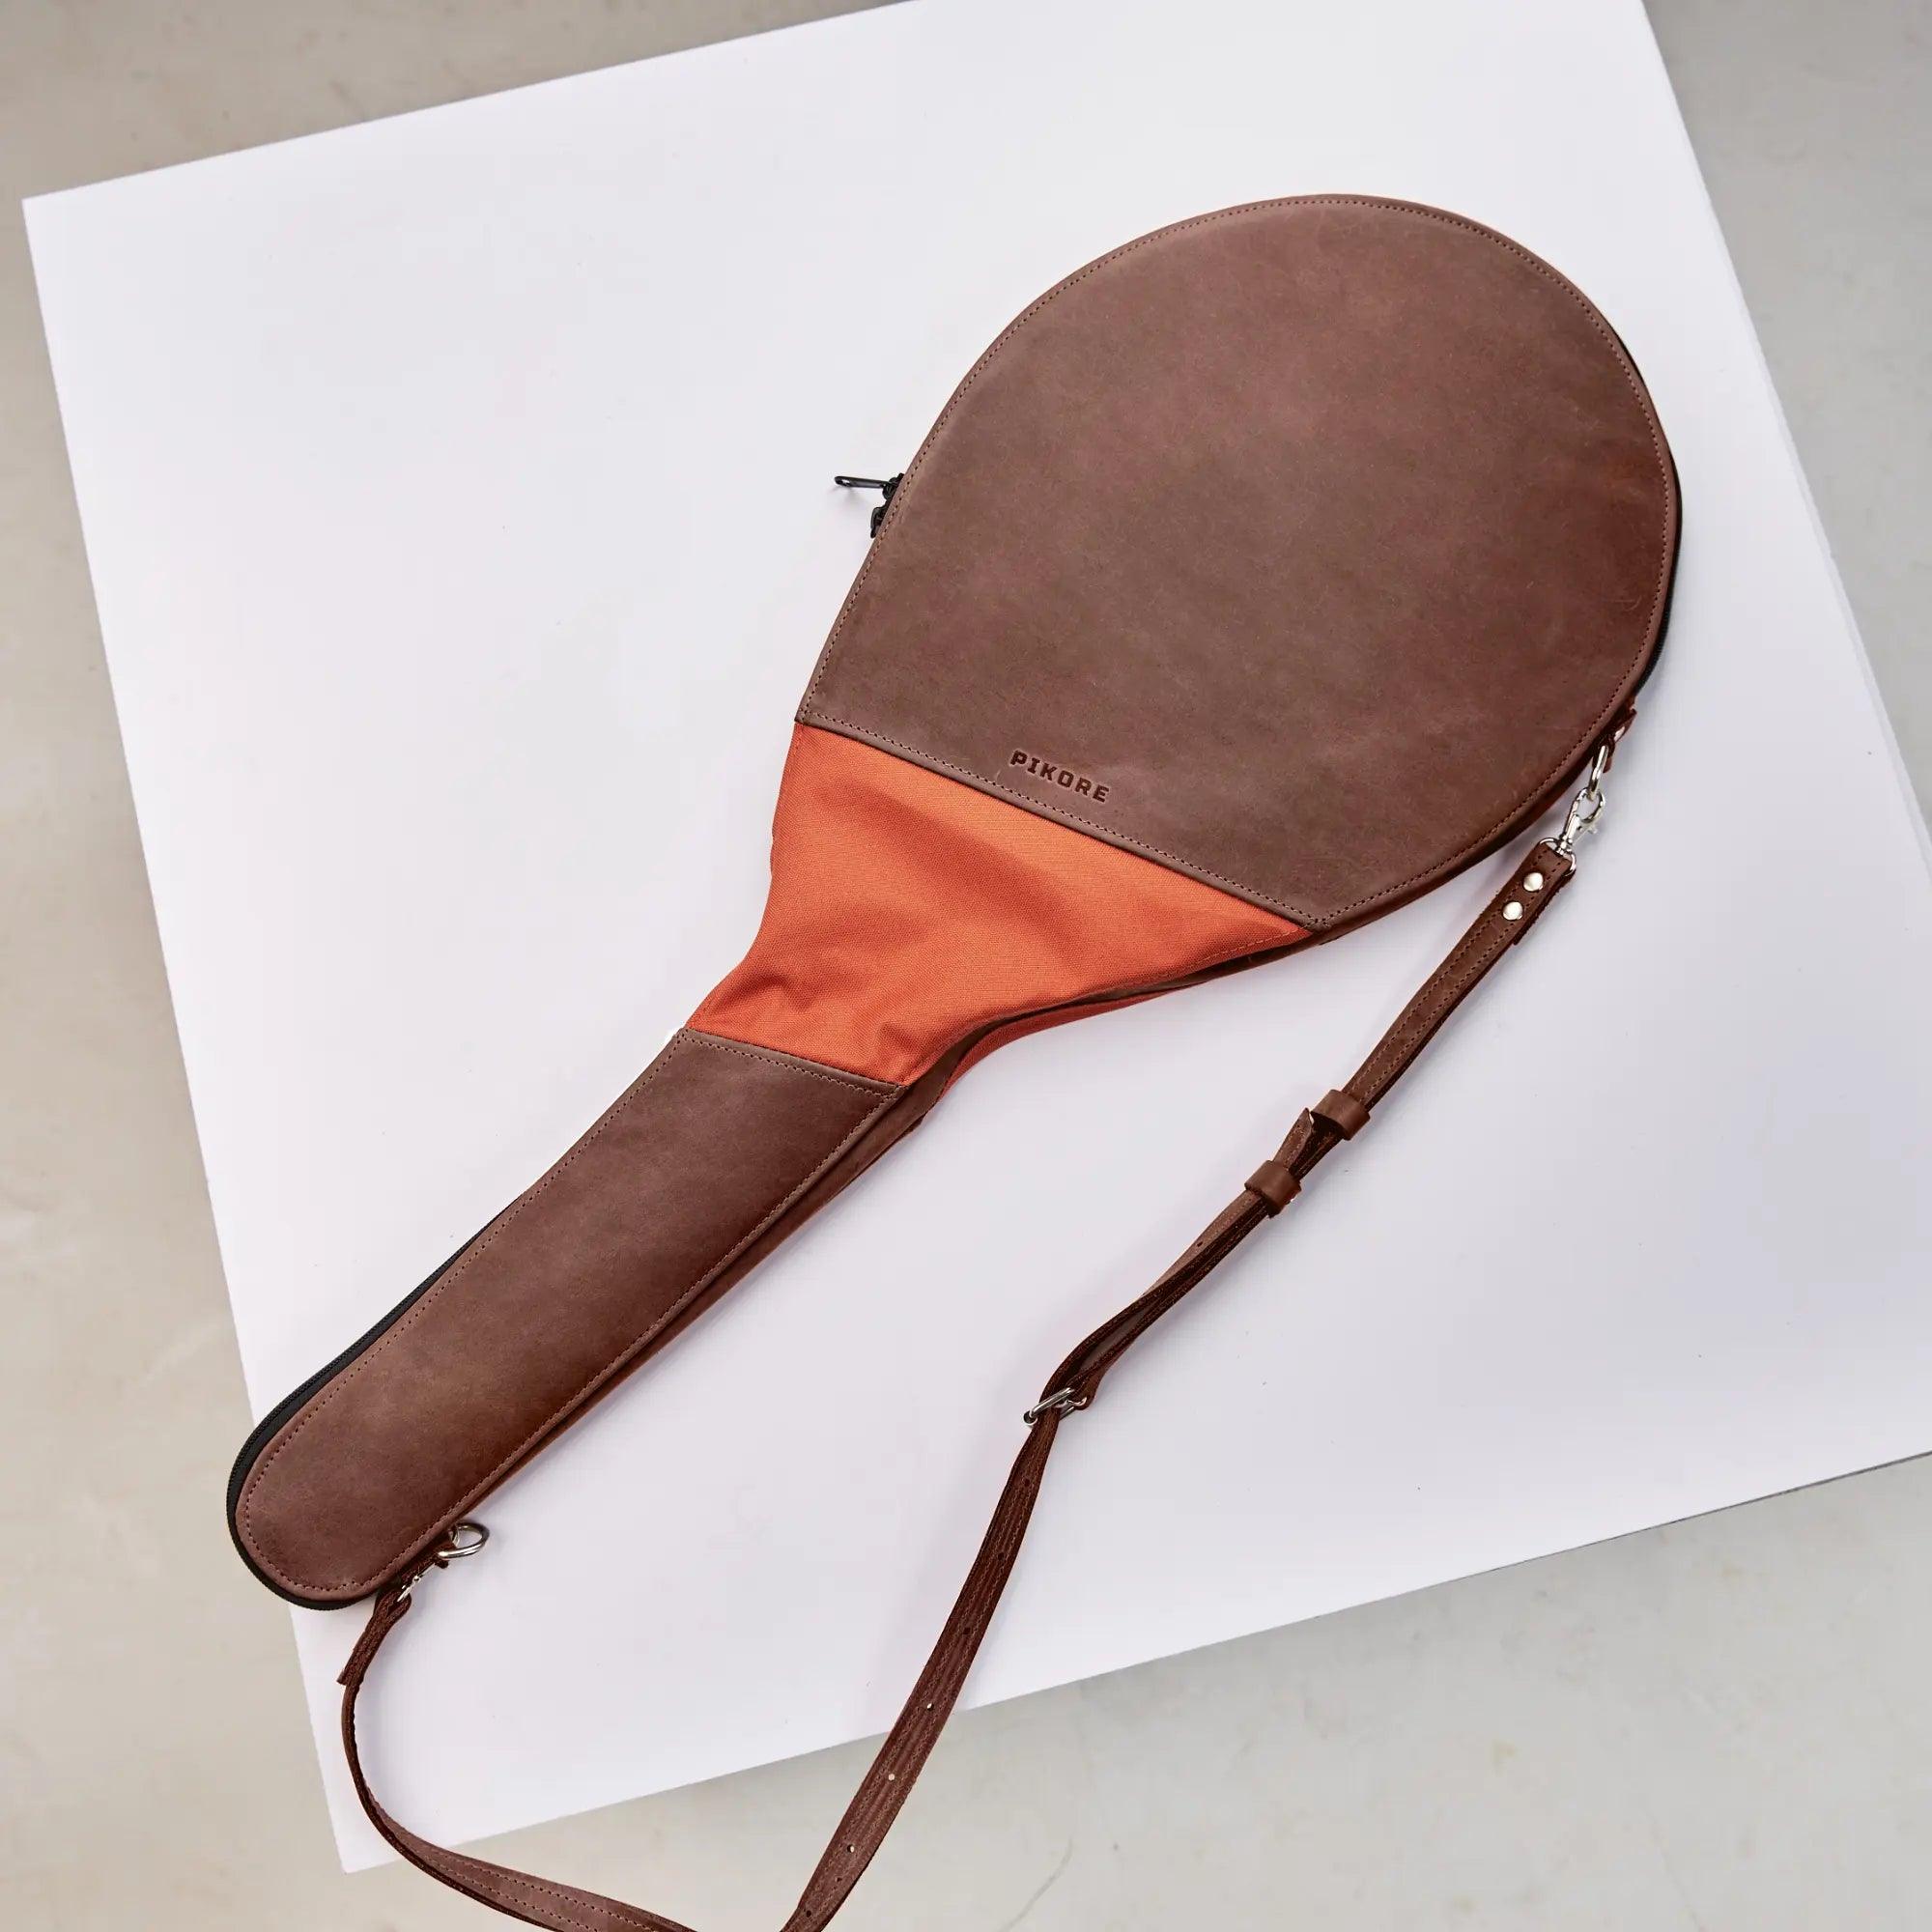 Leather Tennis Bag - Pikore